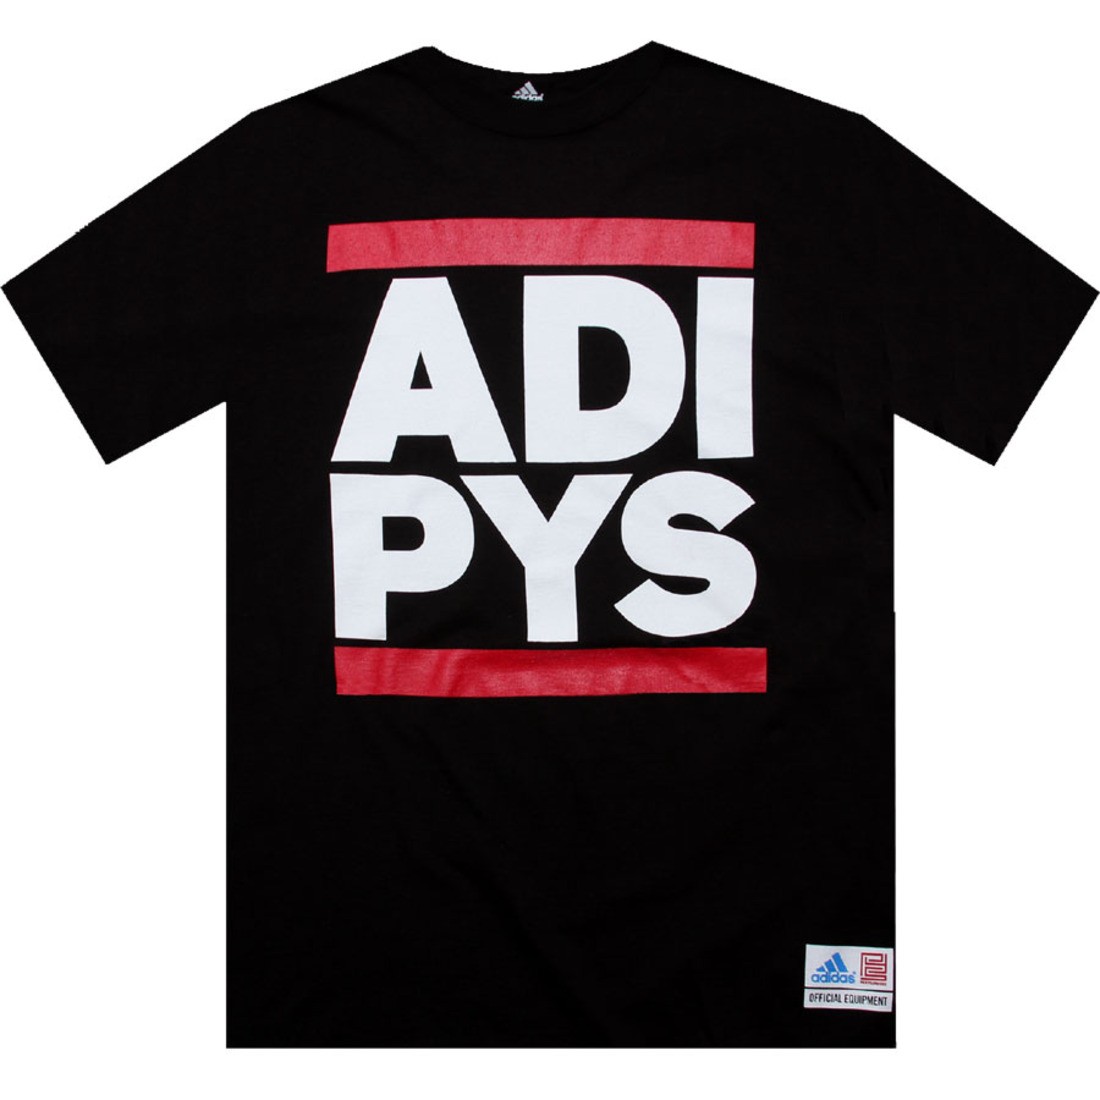 Adidas (black) style DMC Adi shirt PYS Run Tee